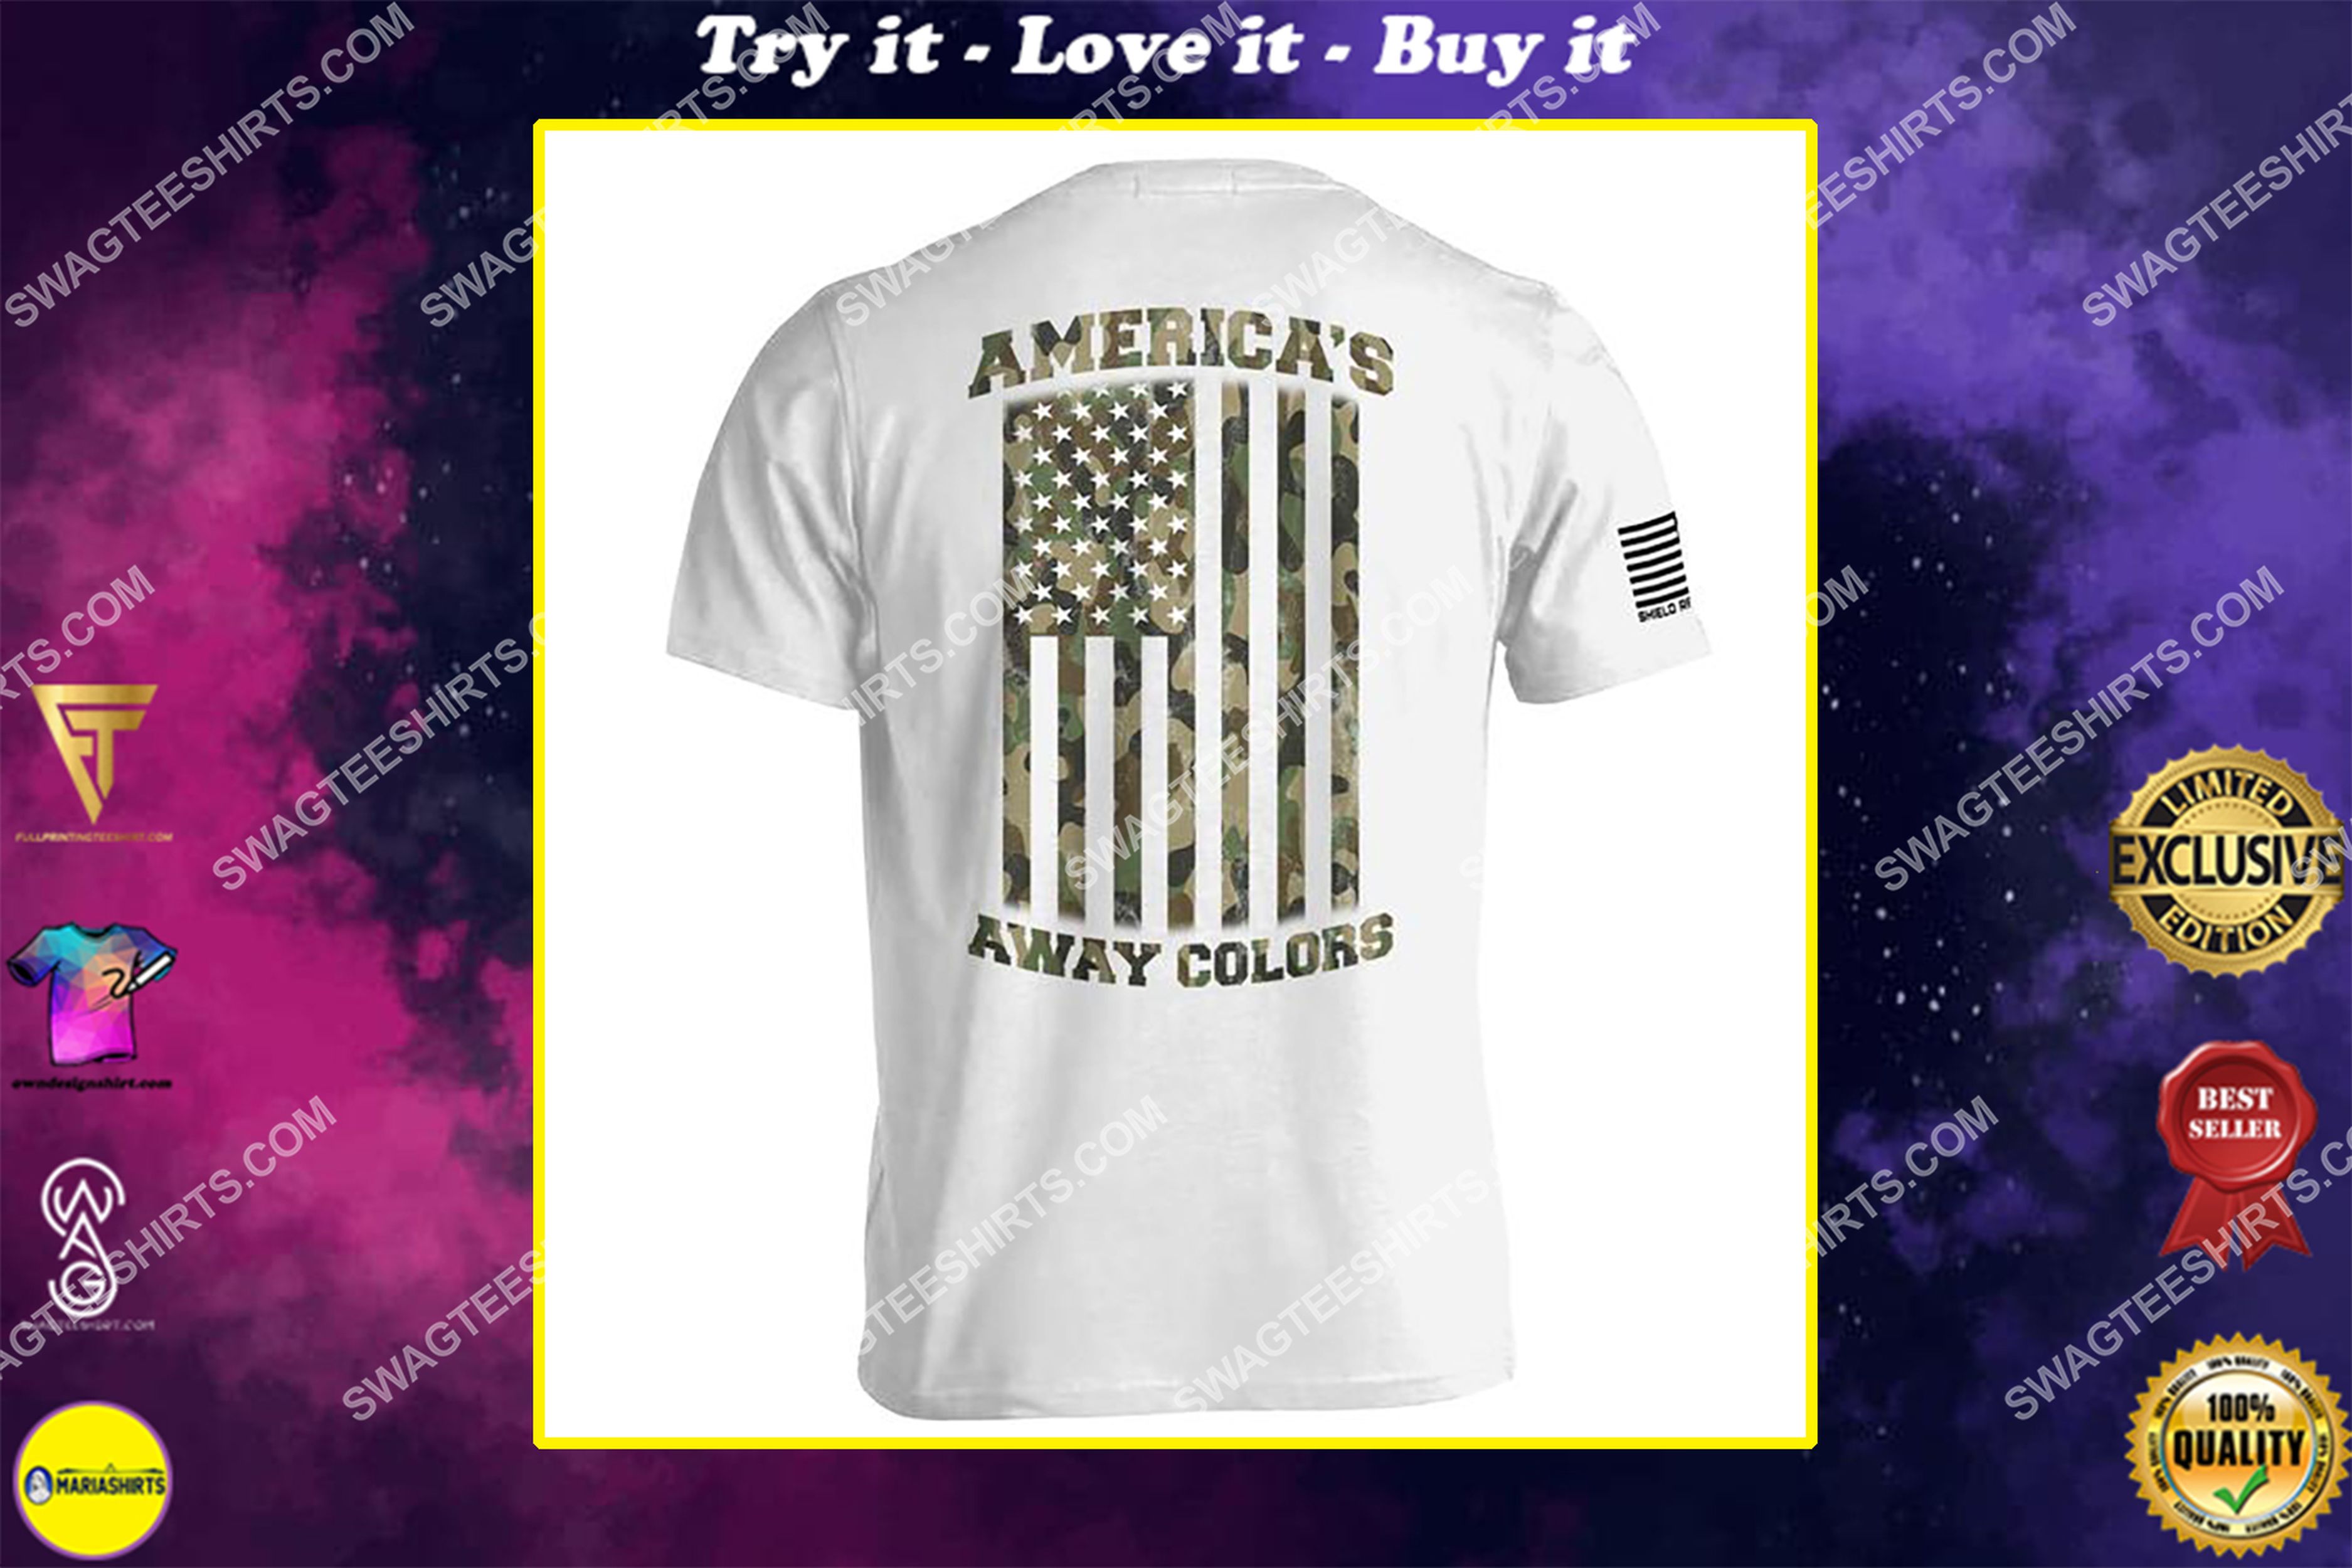 [special edition] american flag camo americas away colors political shirt – maria